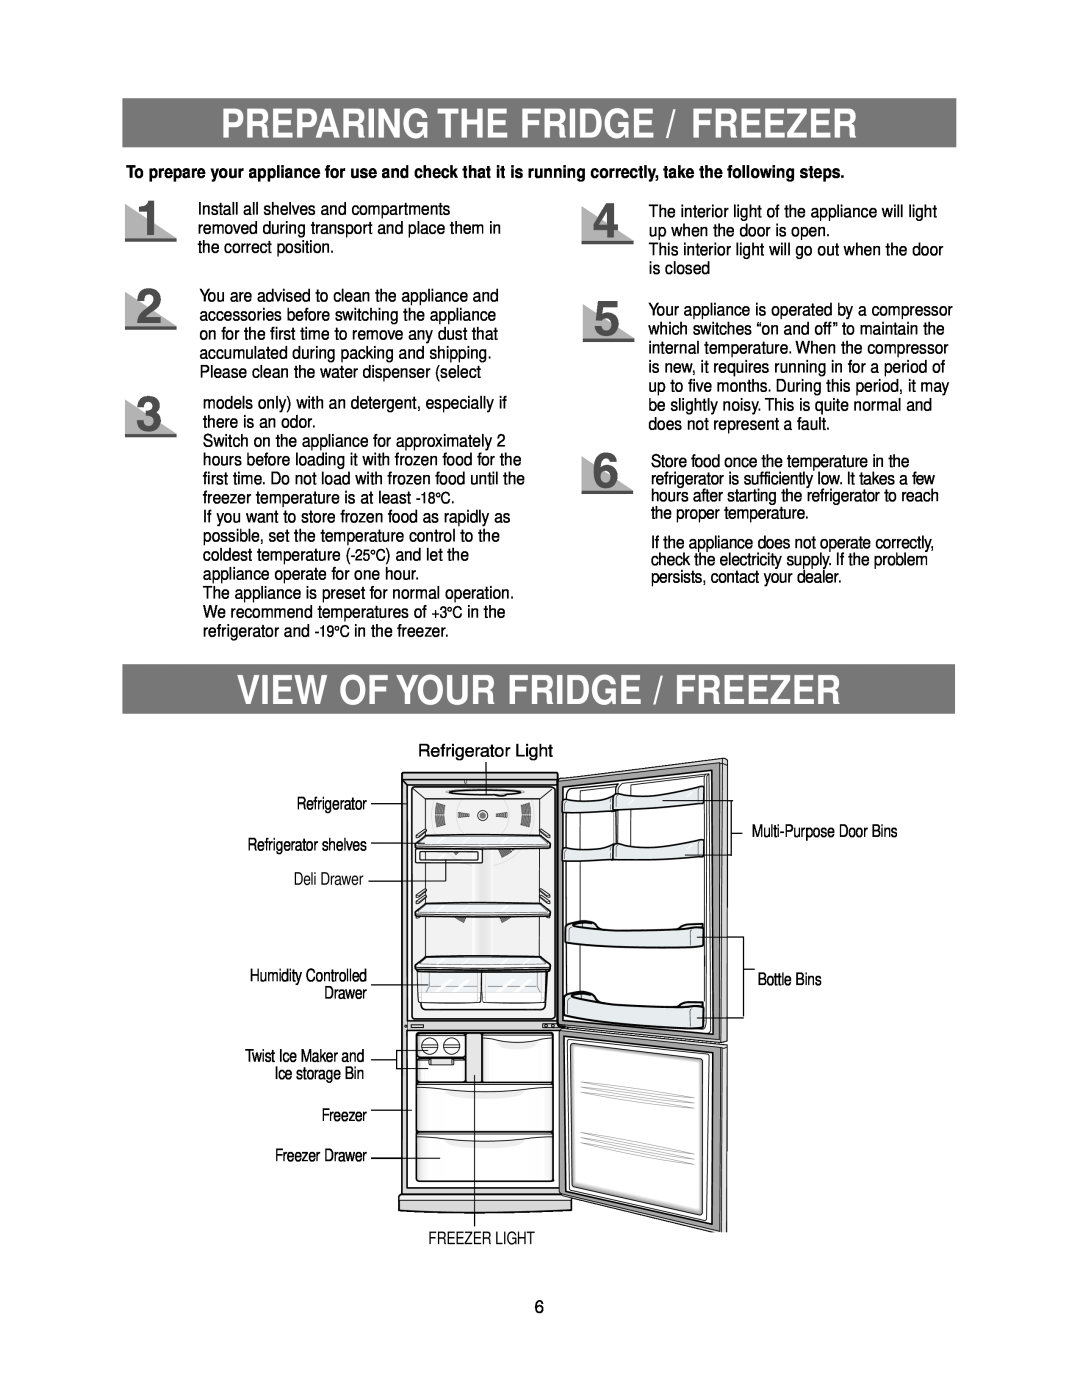 Samsung RB193KASB owner manual Preparing The Fridge / Freezer, View Of Your Fridge / Freezer 